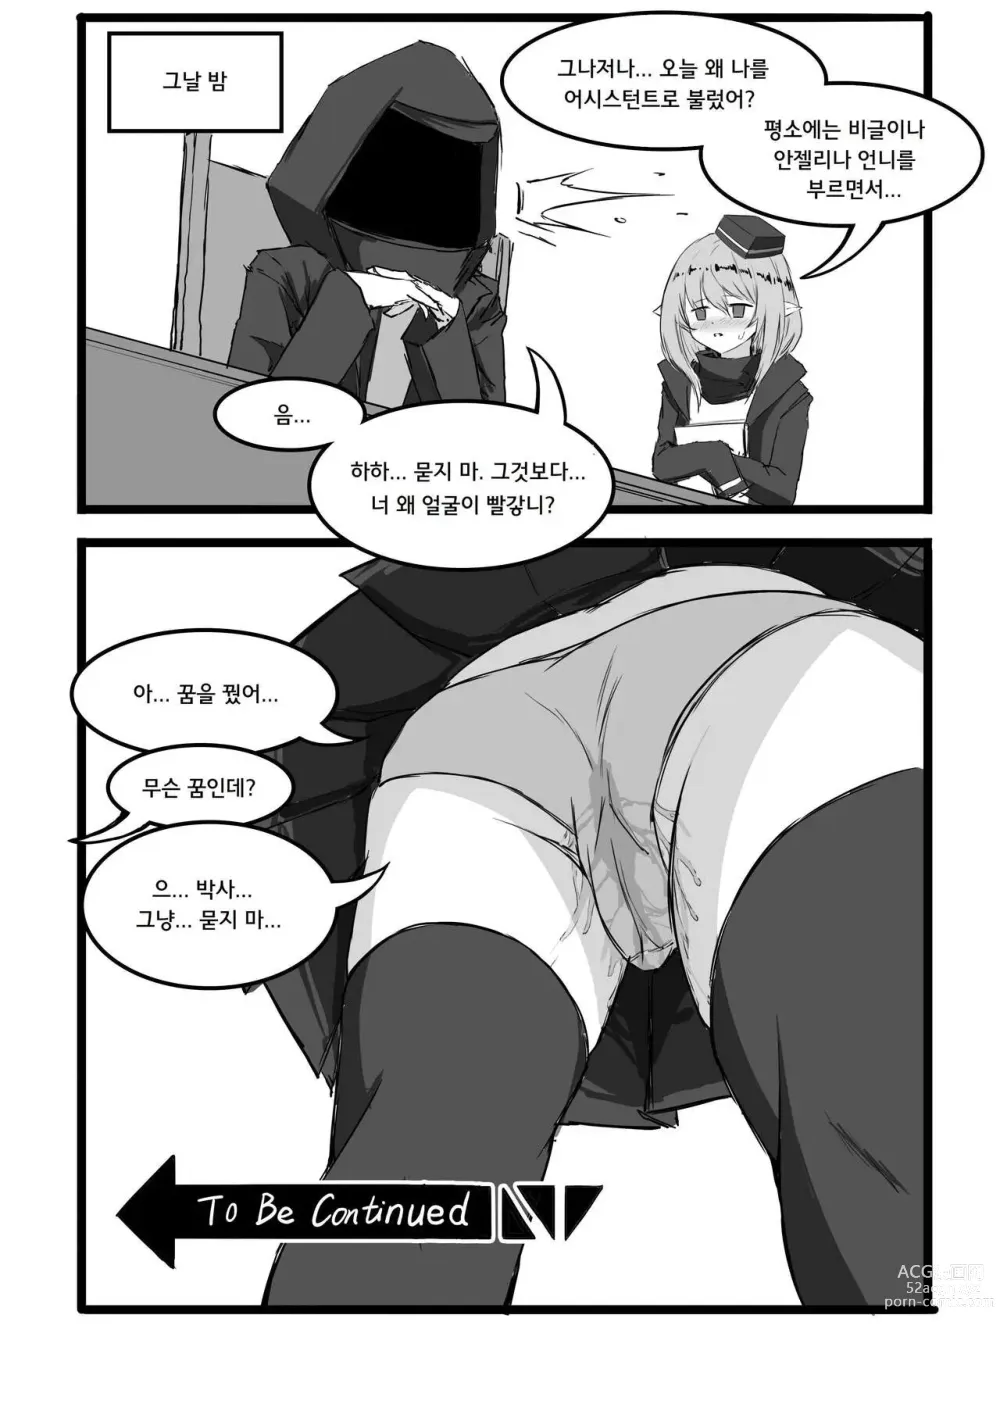 Page 15 of doujinshi 두린 수면강간